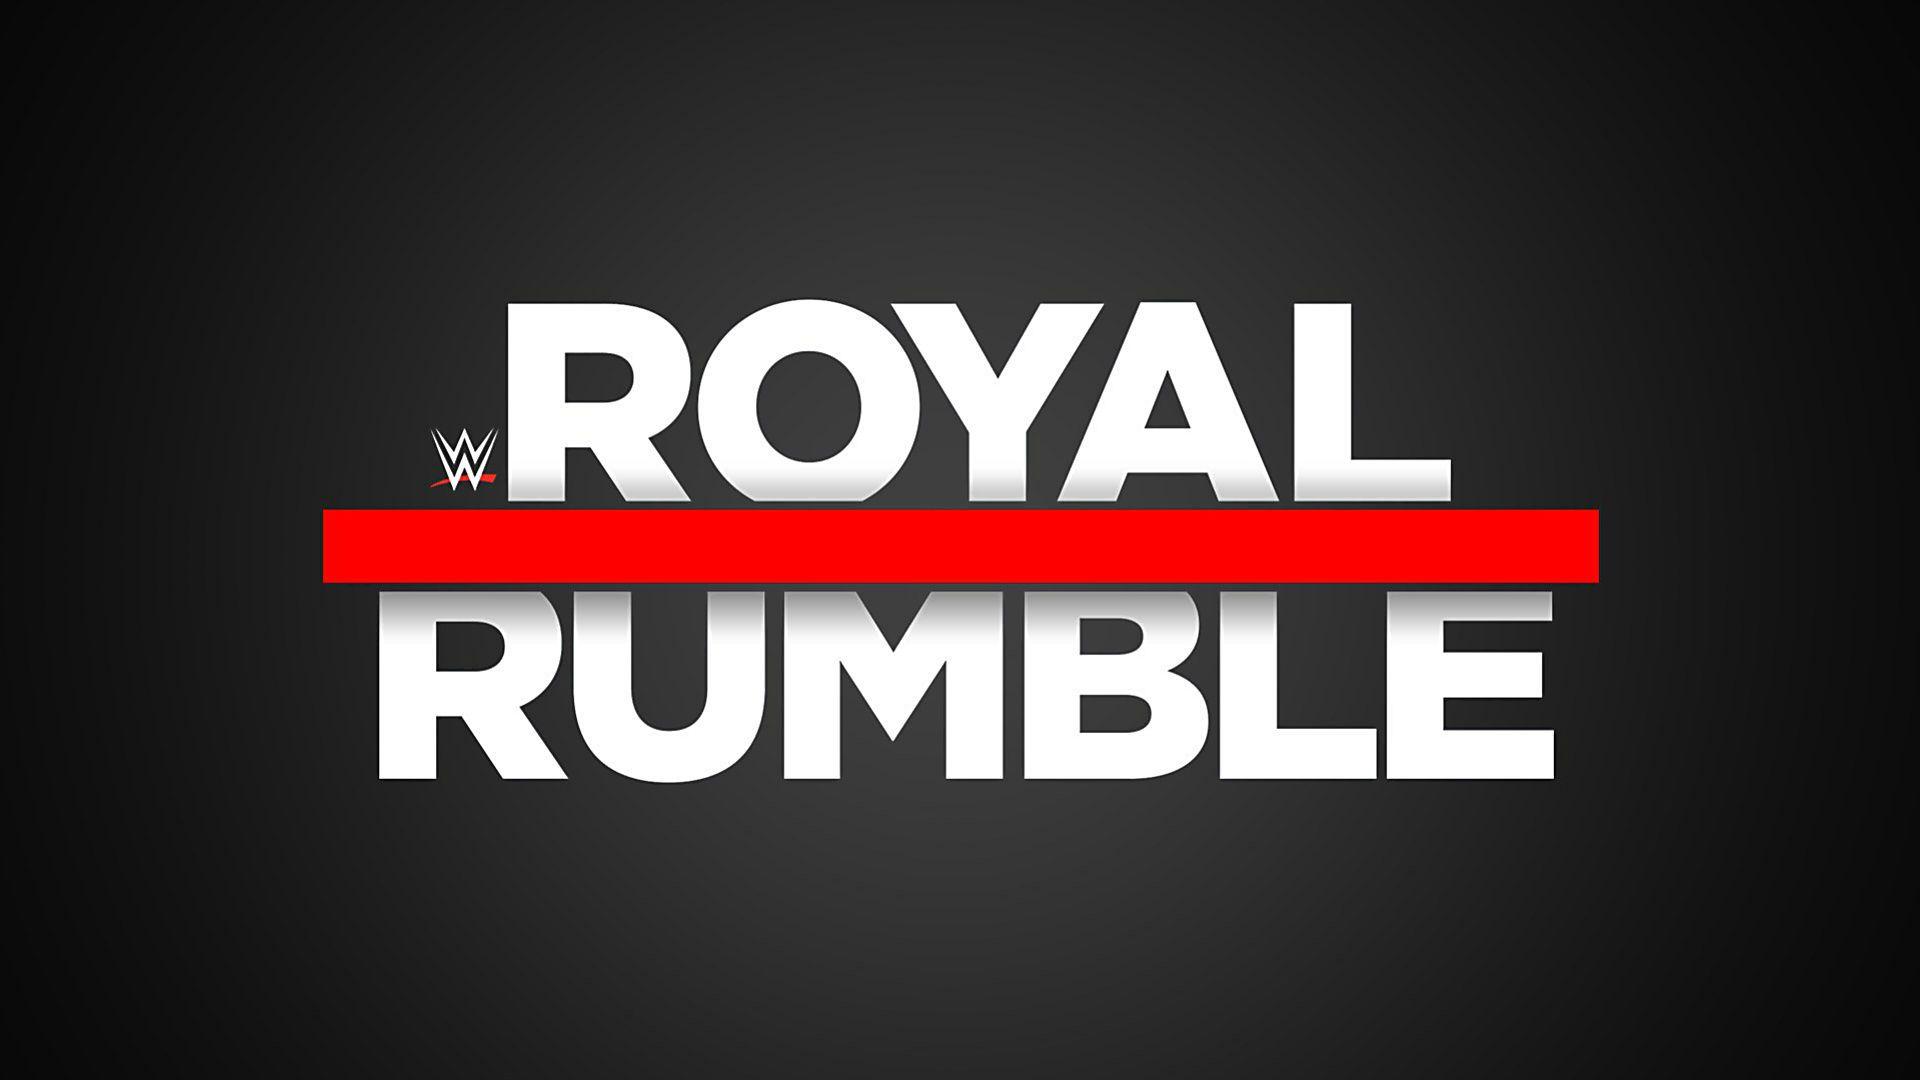 WWE Royal Rumble 2018: Date, start time, confirmed entrants, rumors